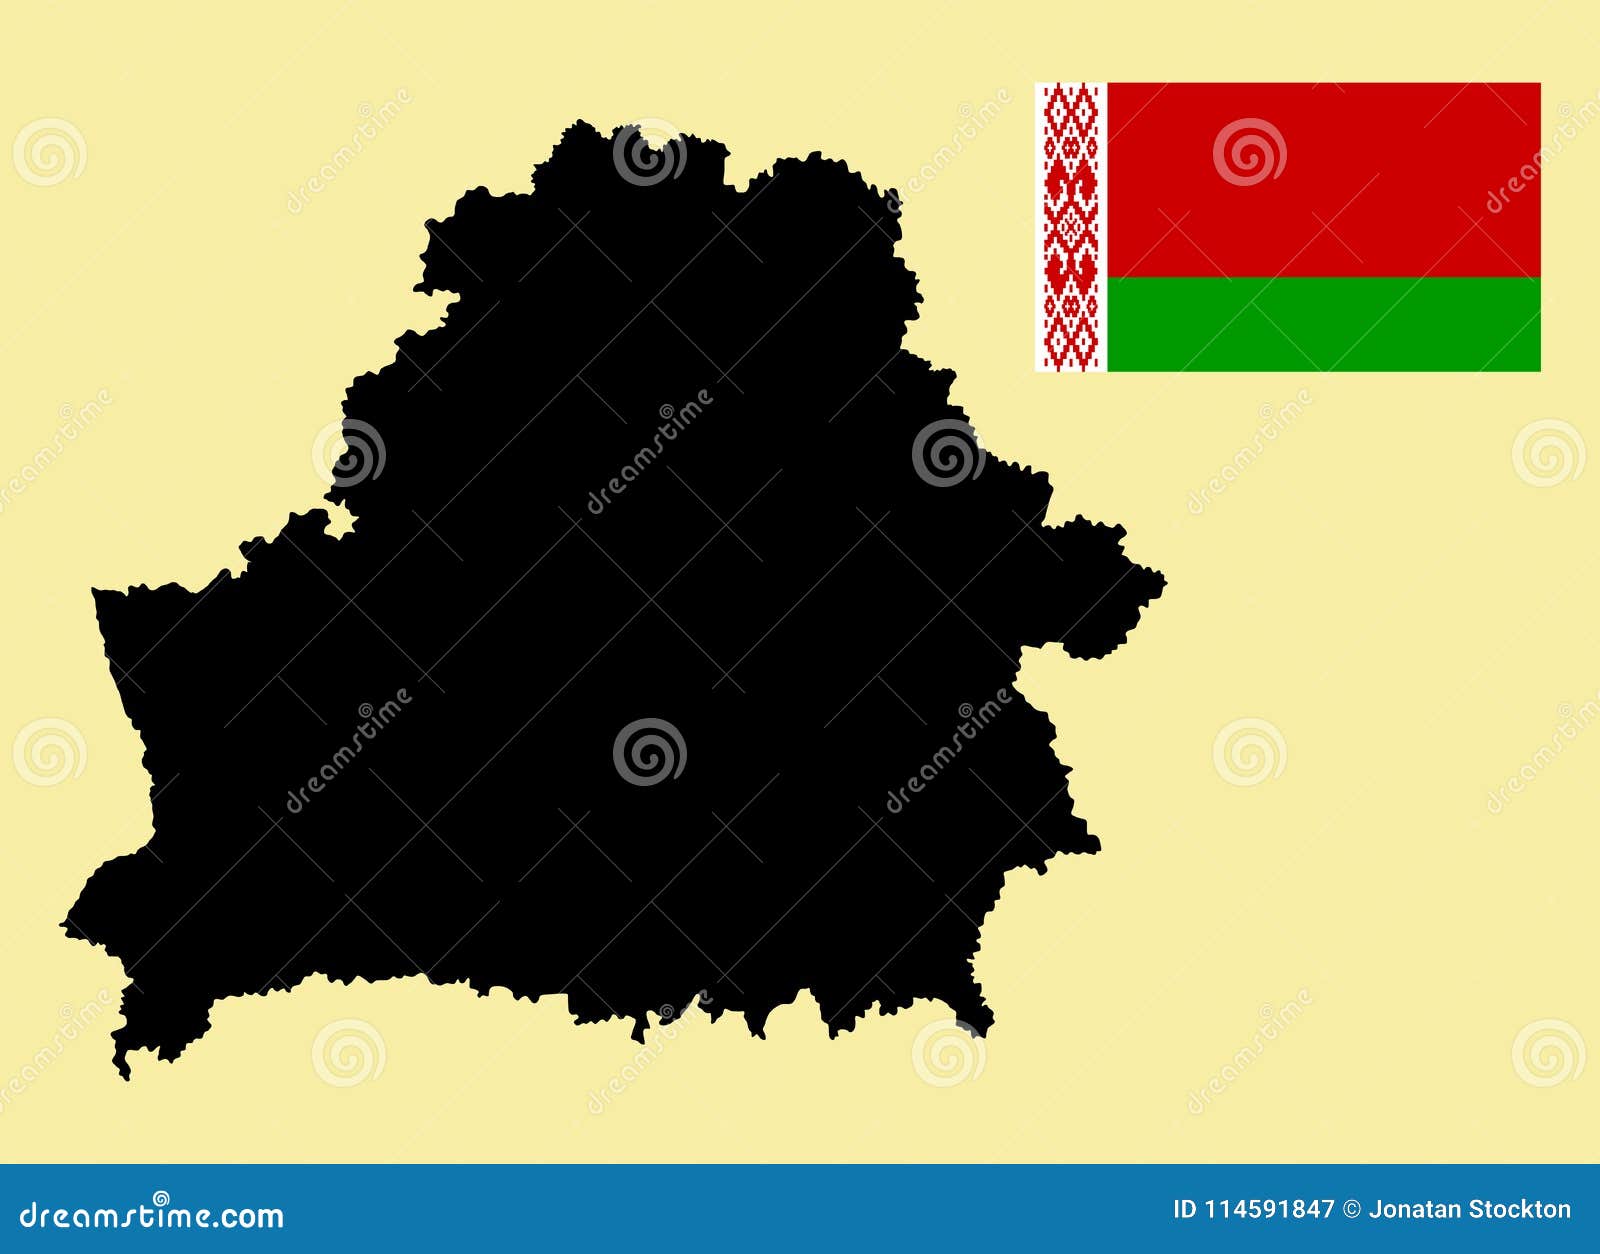 Belarus High Detailed Map Silhouette And Flag Of Belarus Stock Illustration Illustration Of Light High 114591847